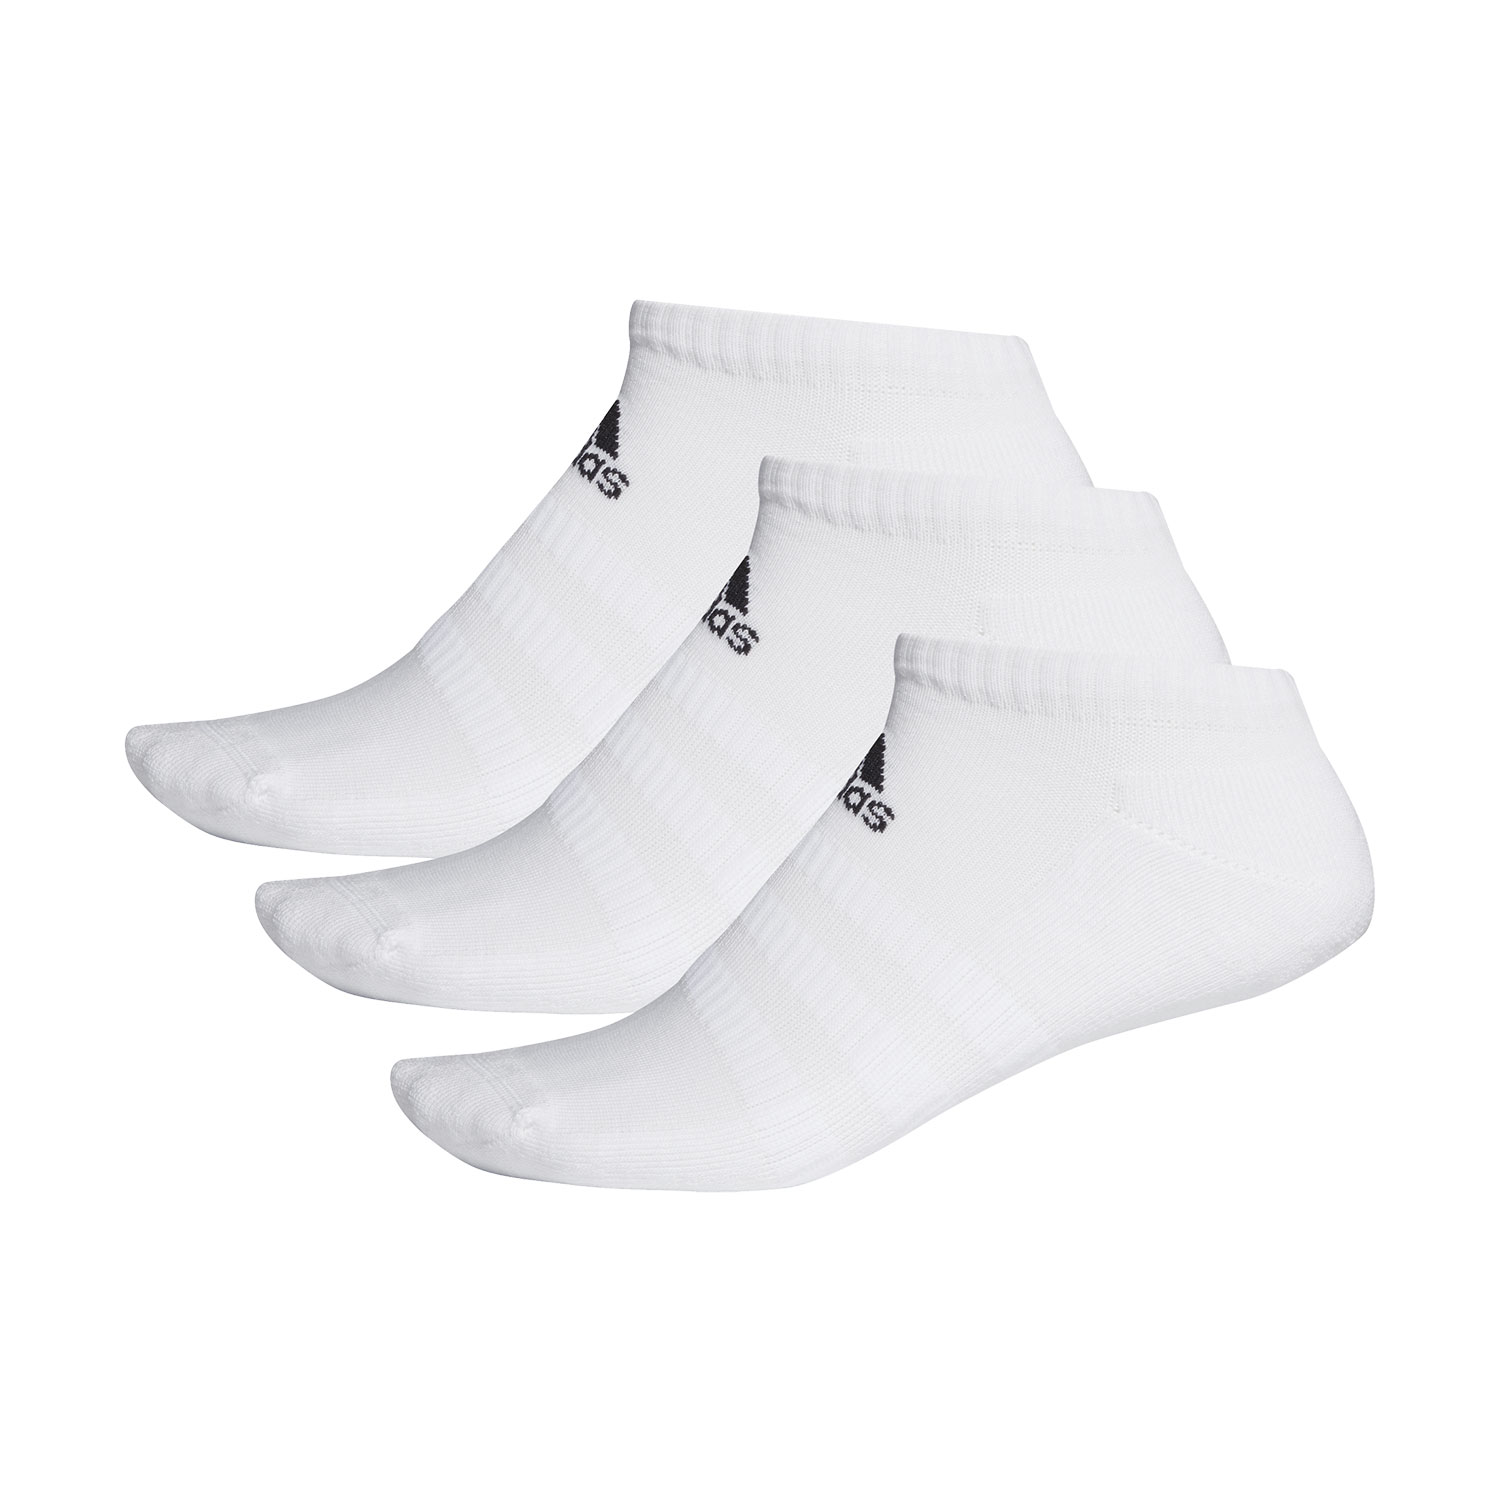 Adidas Logo Cushioned x 3 Socks - White